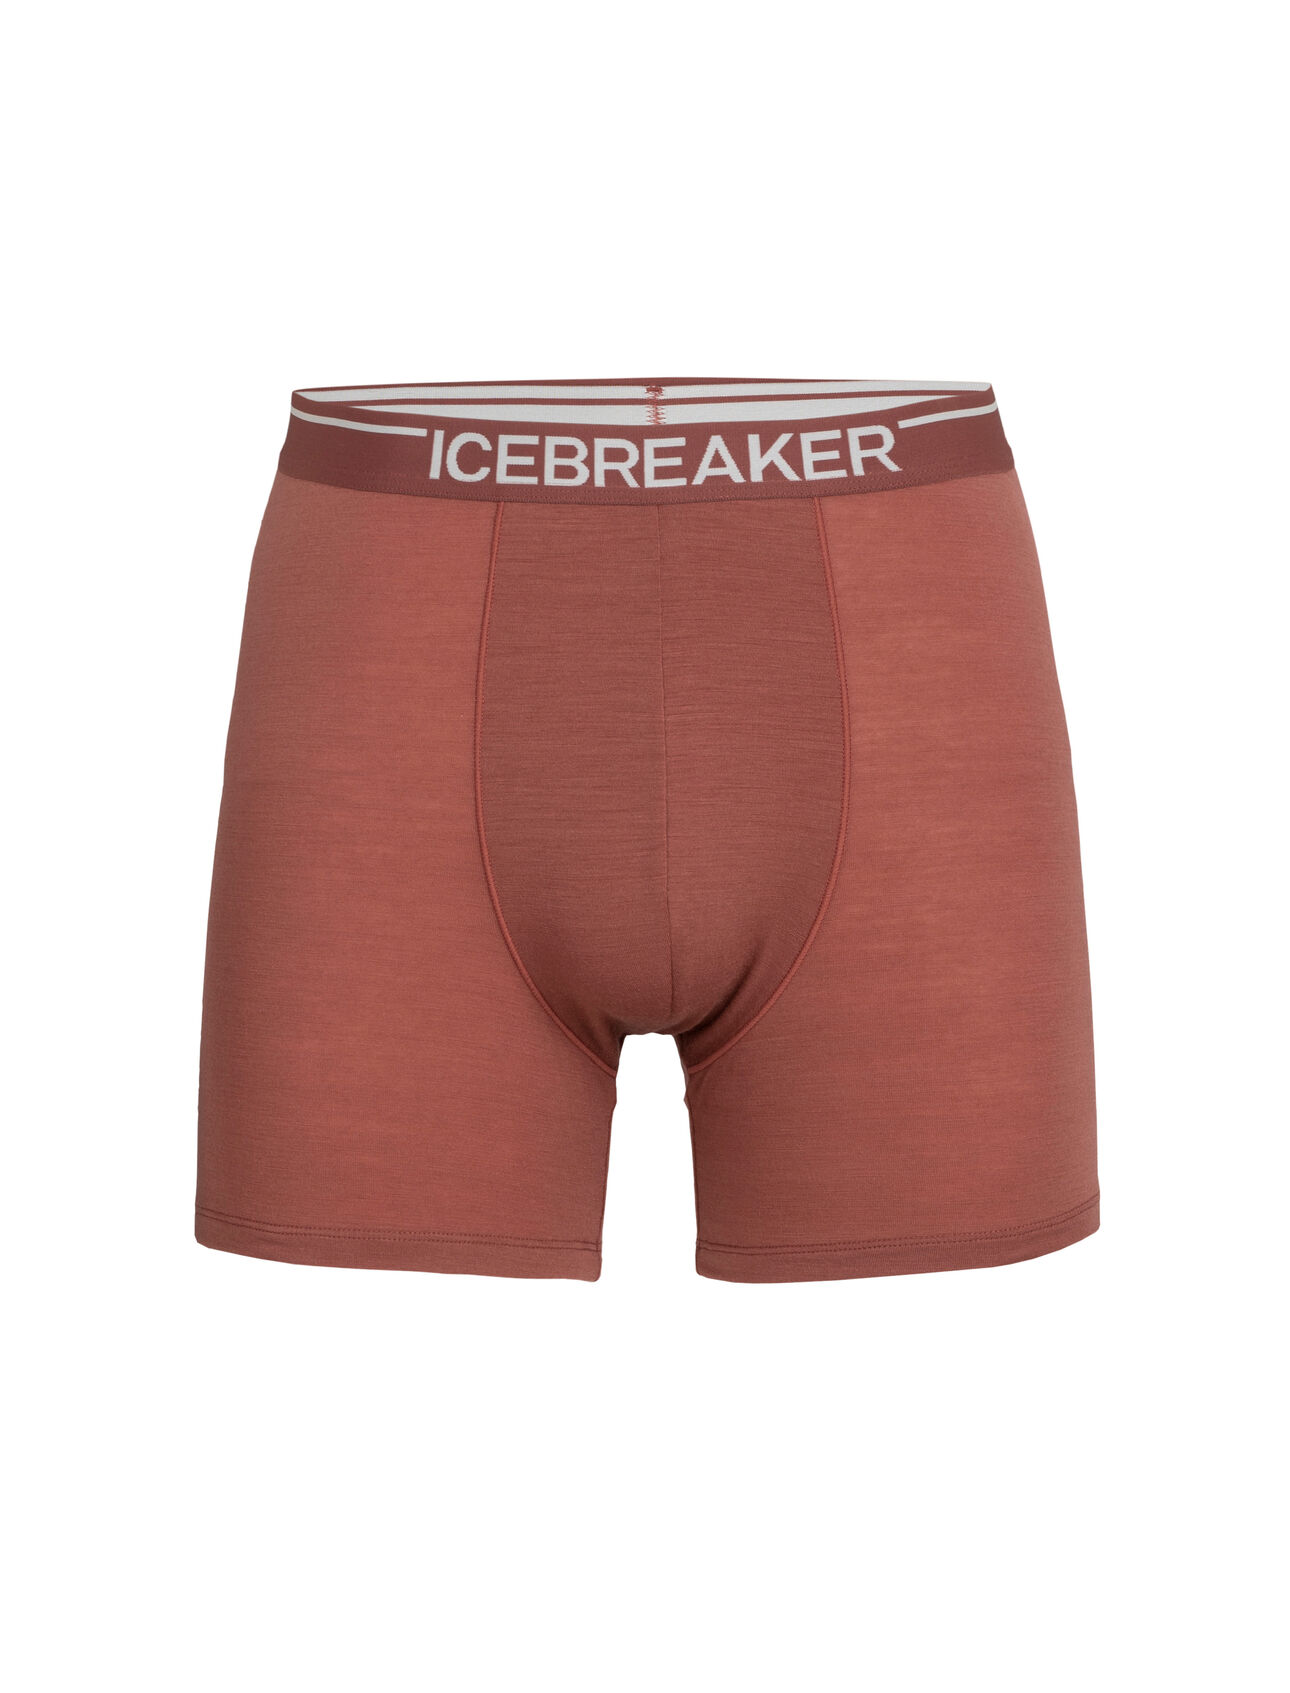 Icebreaker Anatomica Seamless Long Boxer - Men's - Men